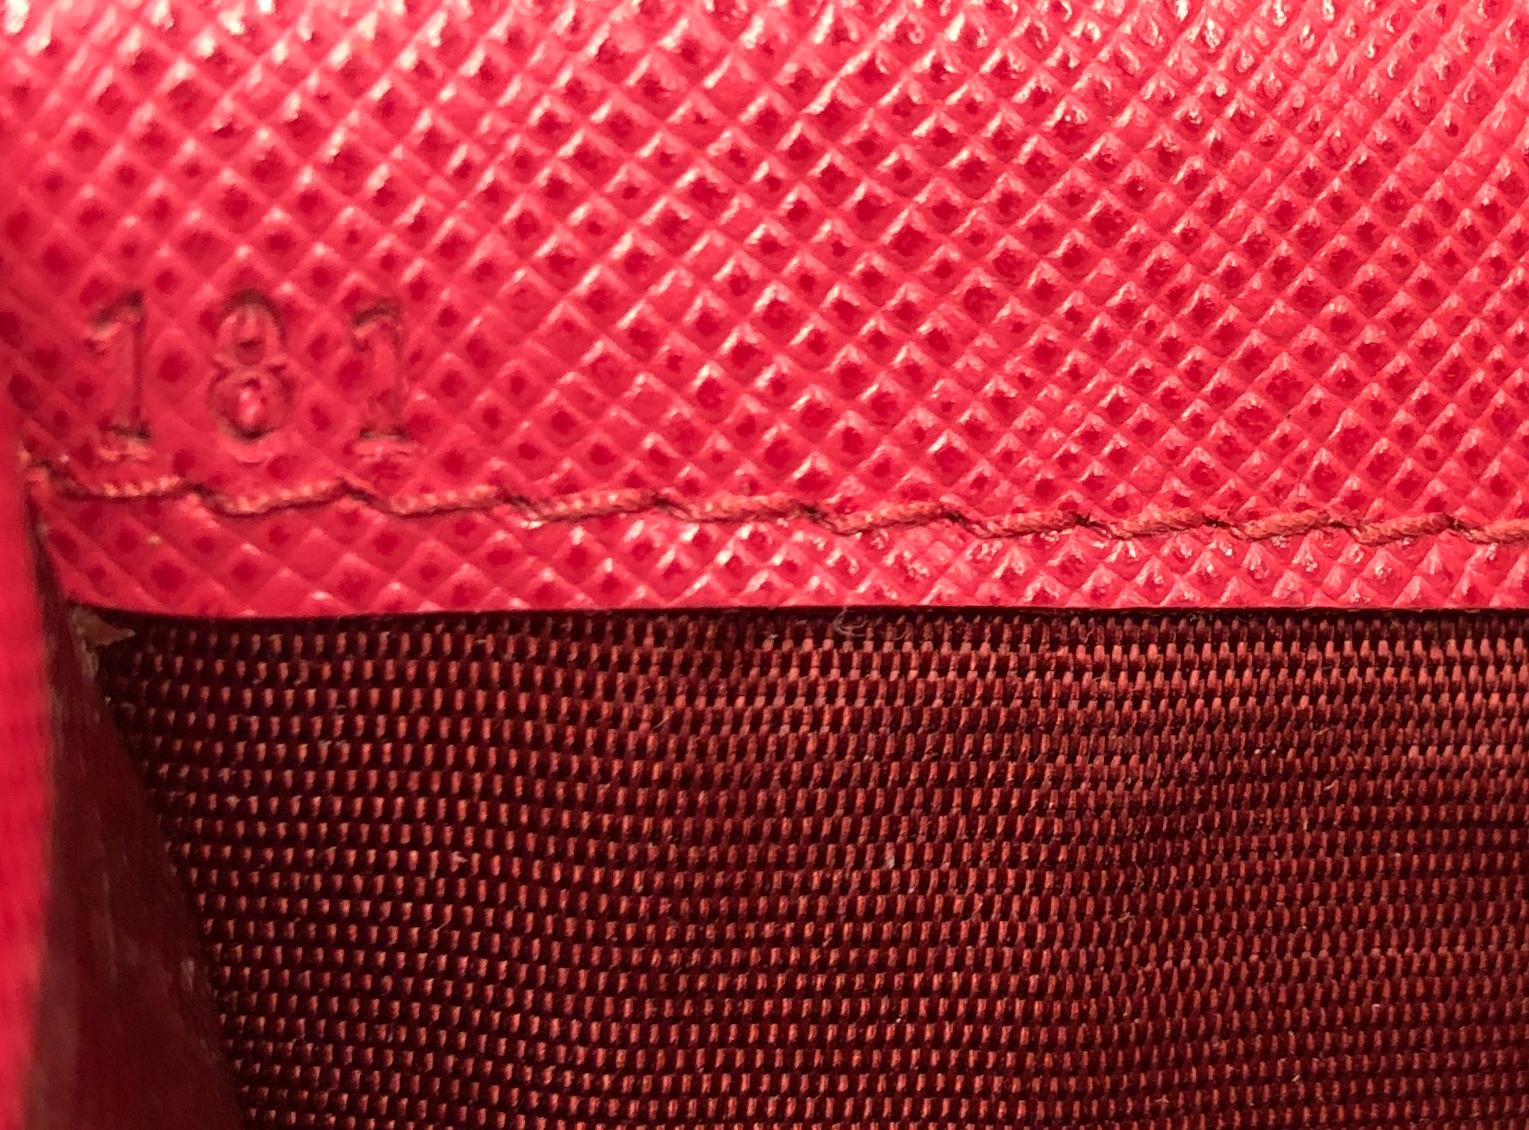 Prada Wallet on Chain Saffiano Leather 3